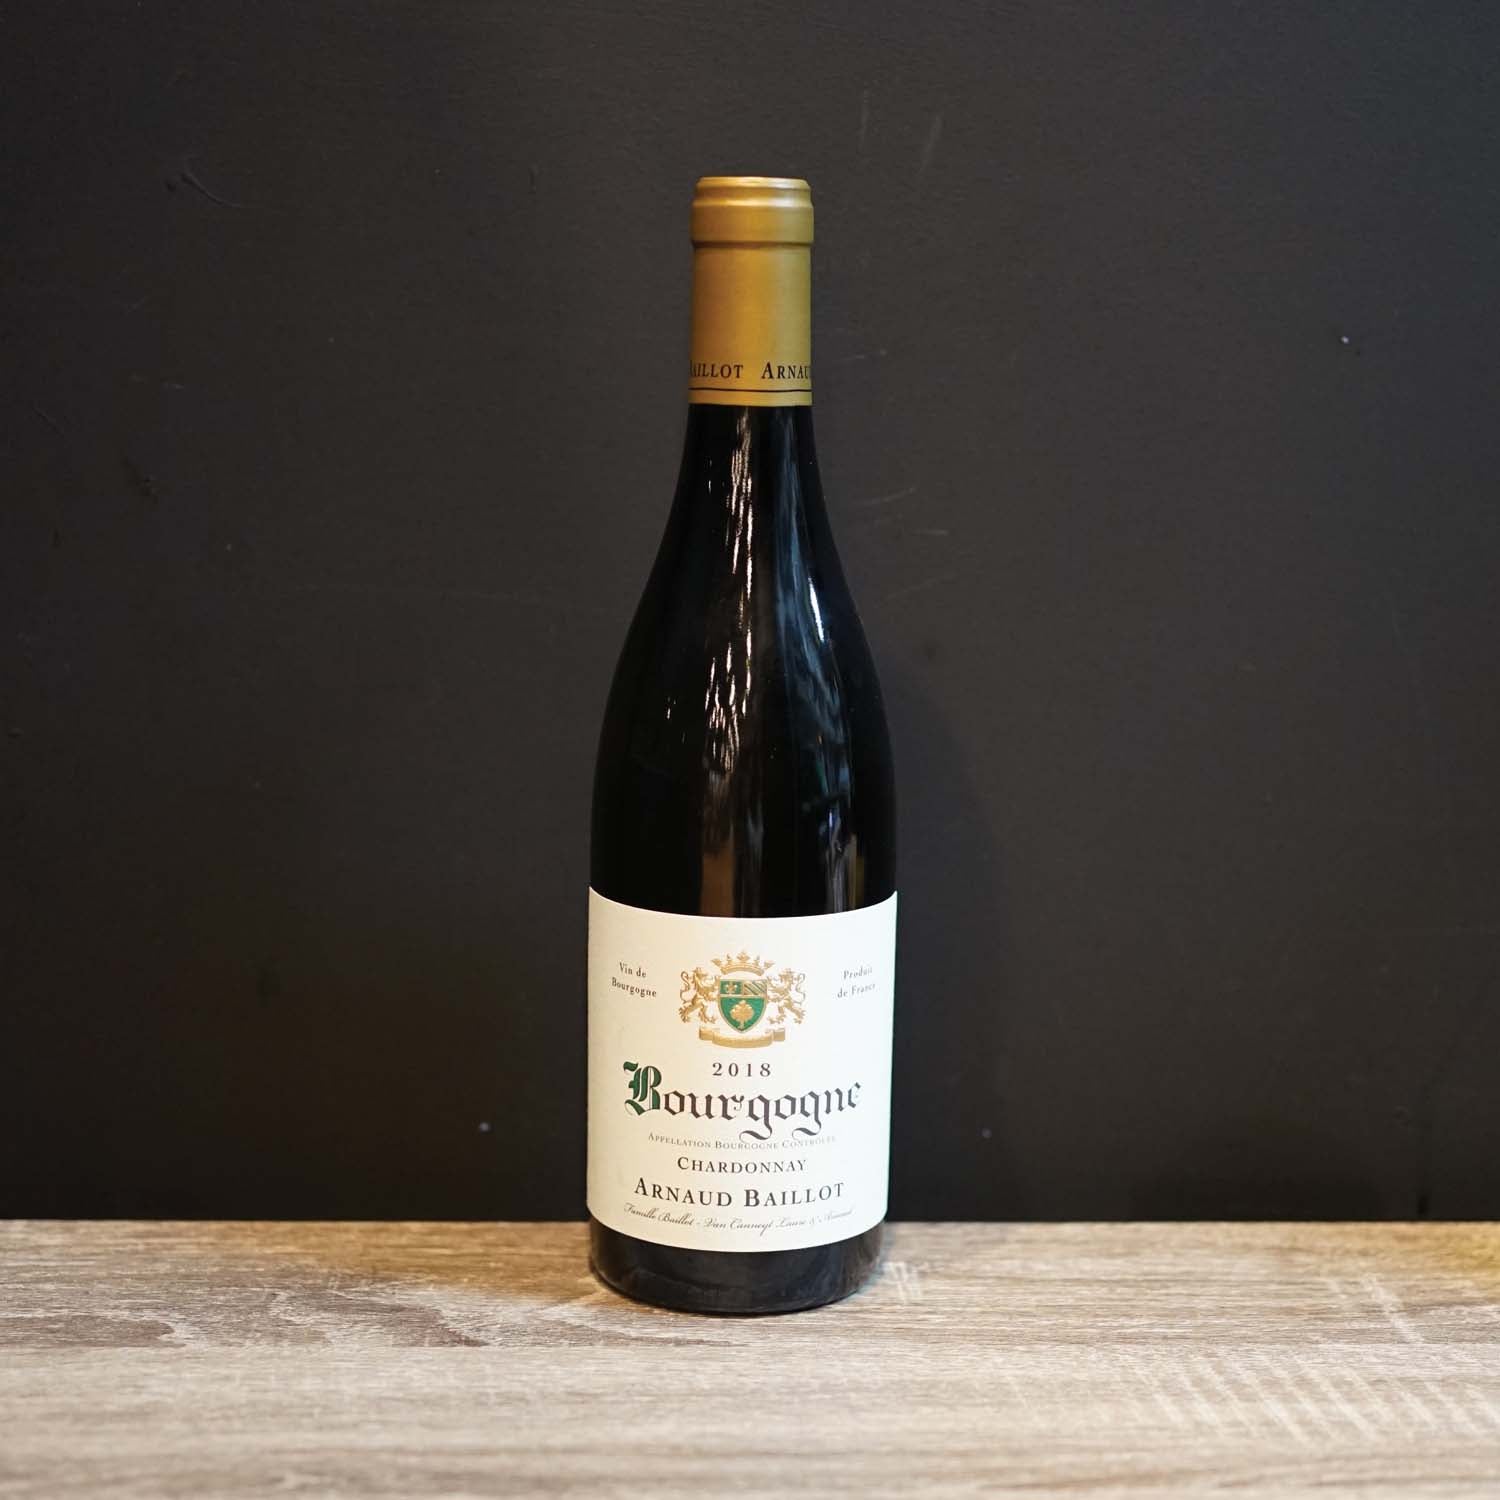 Arnaud Baillot Bourgogne Chardonnay 2018